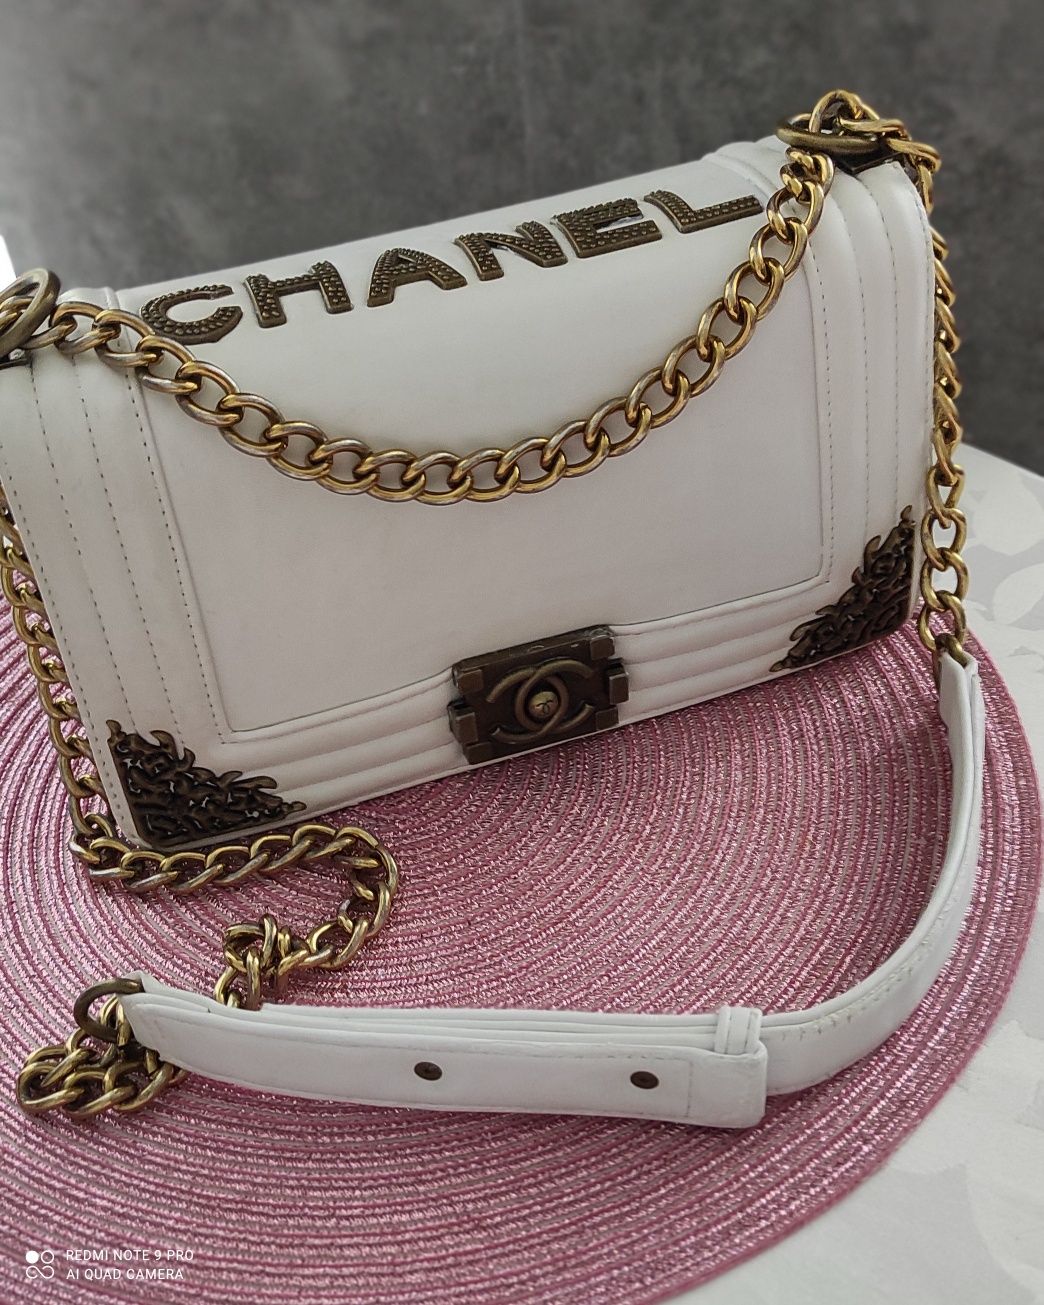 Chanel Boy Chanel сумка